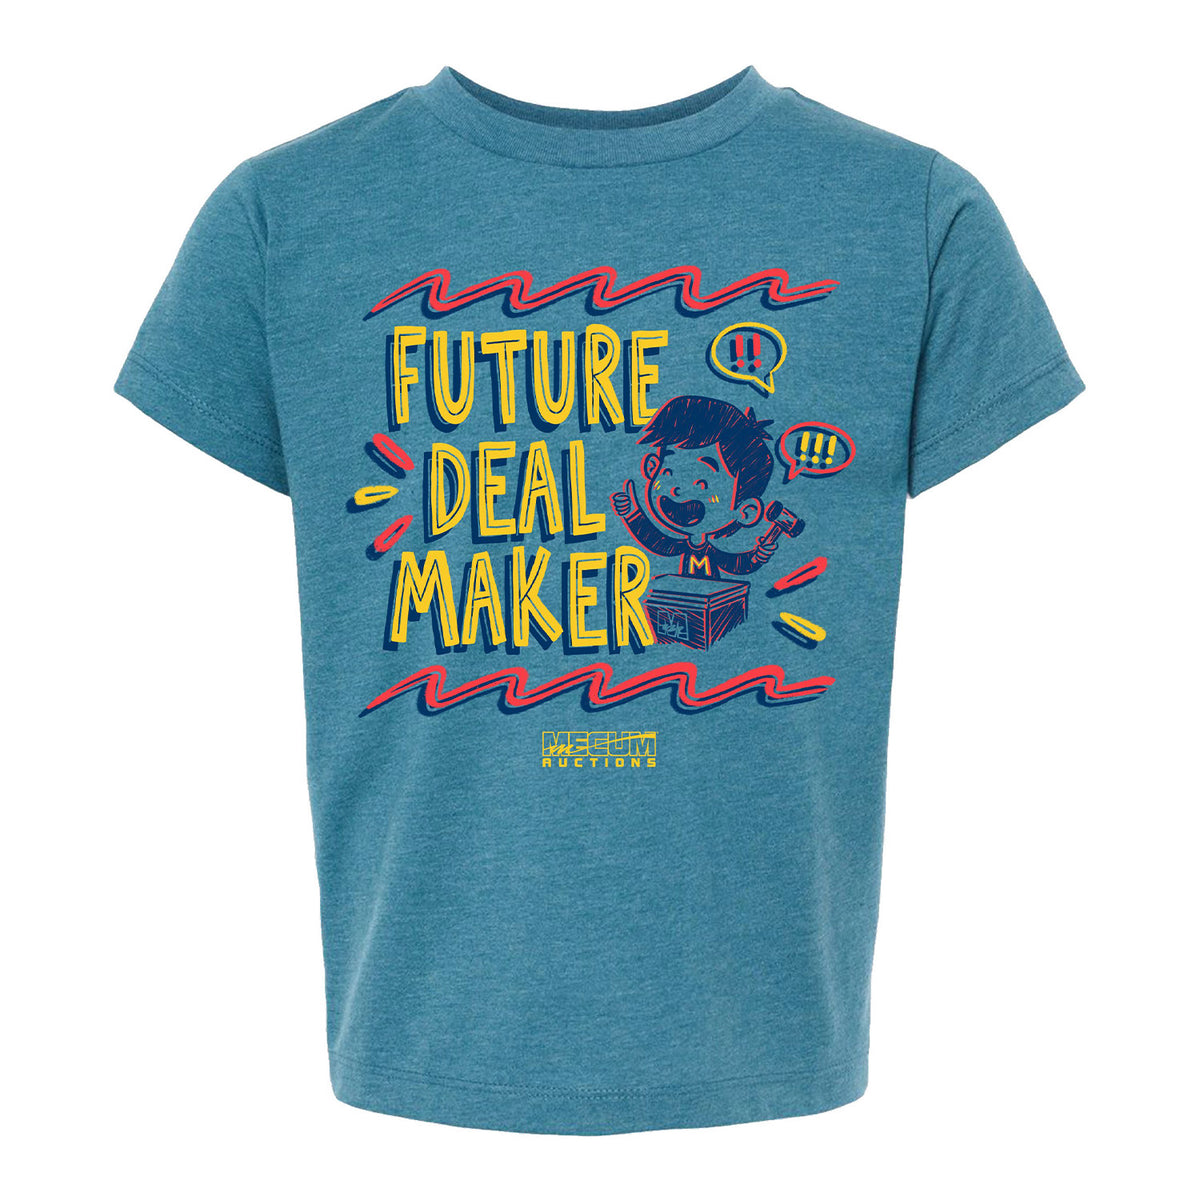 Mecum Future Deal Maker Heather Teal Toddler T-Shirt - Front View